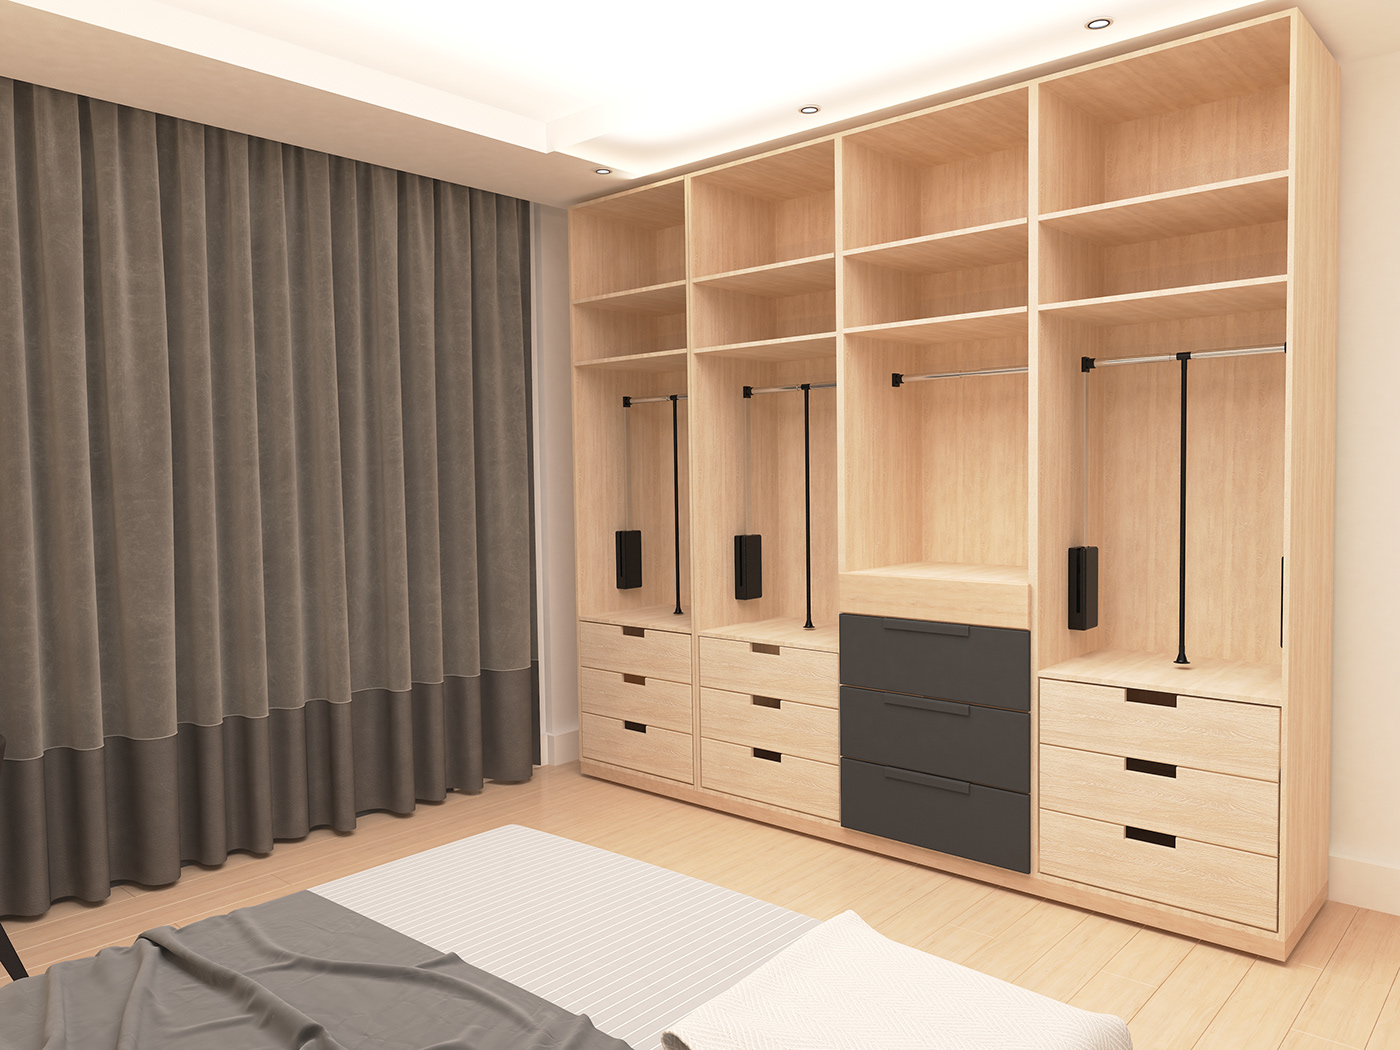 bed room bedroom 3dsmax vray architecture interior design  bed light detail design